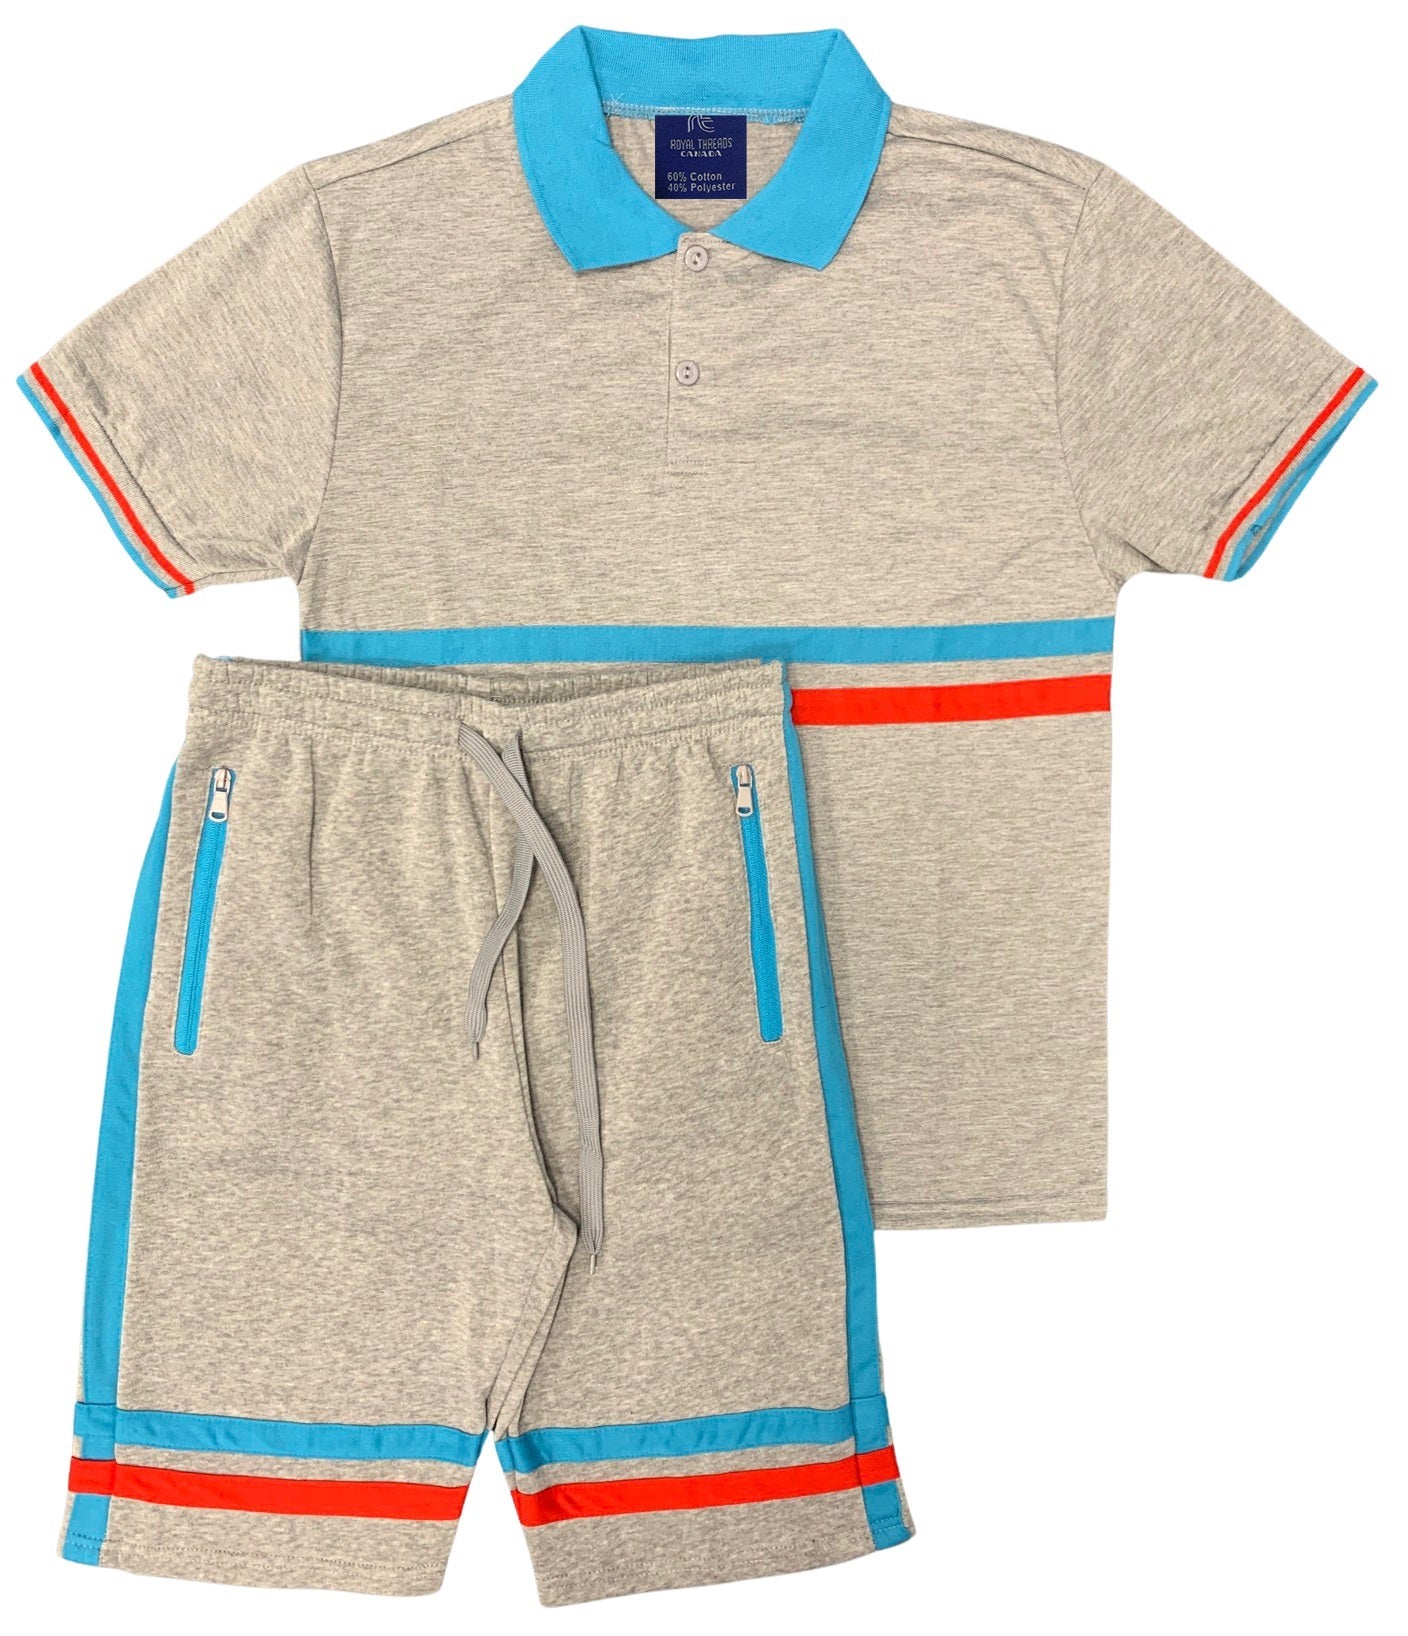 Men’s 2-Piece Short Set with 2 bottom down Shirt and Soft Fleece Summer Shorts Matching Outfit